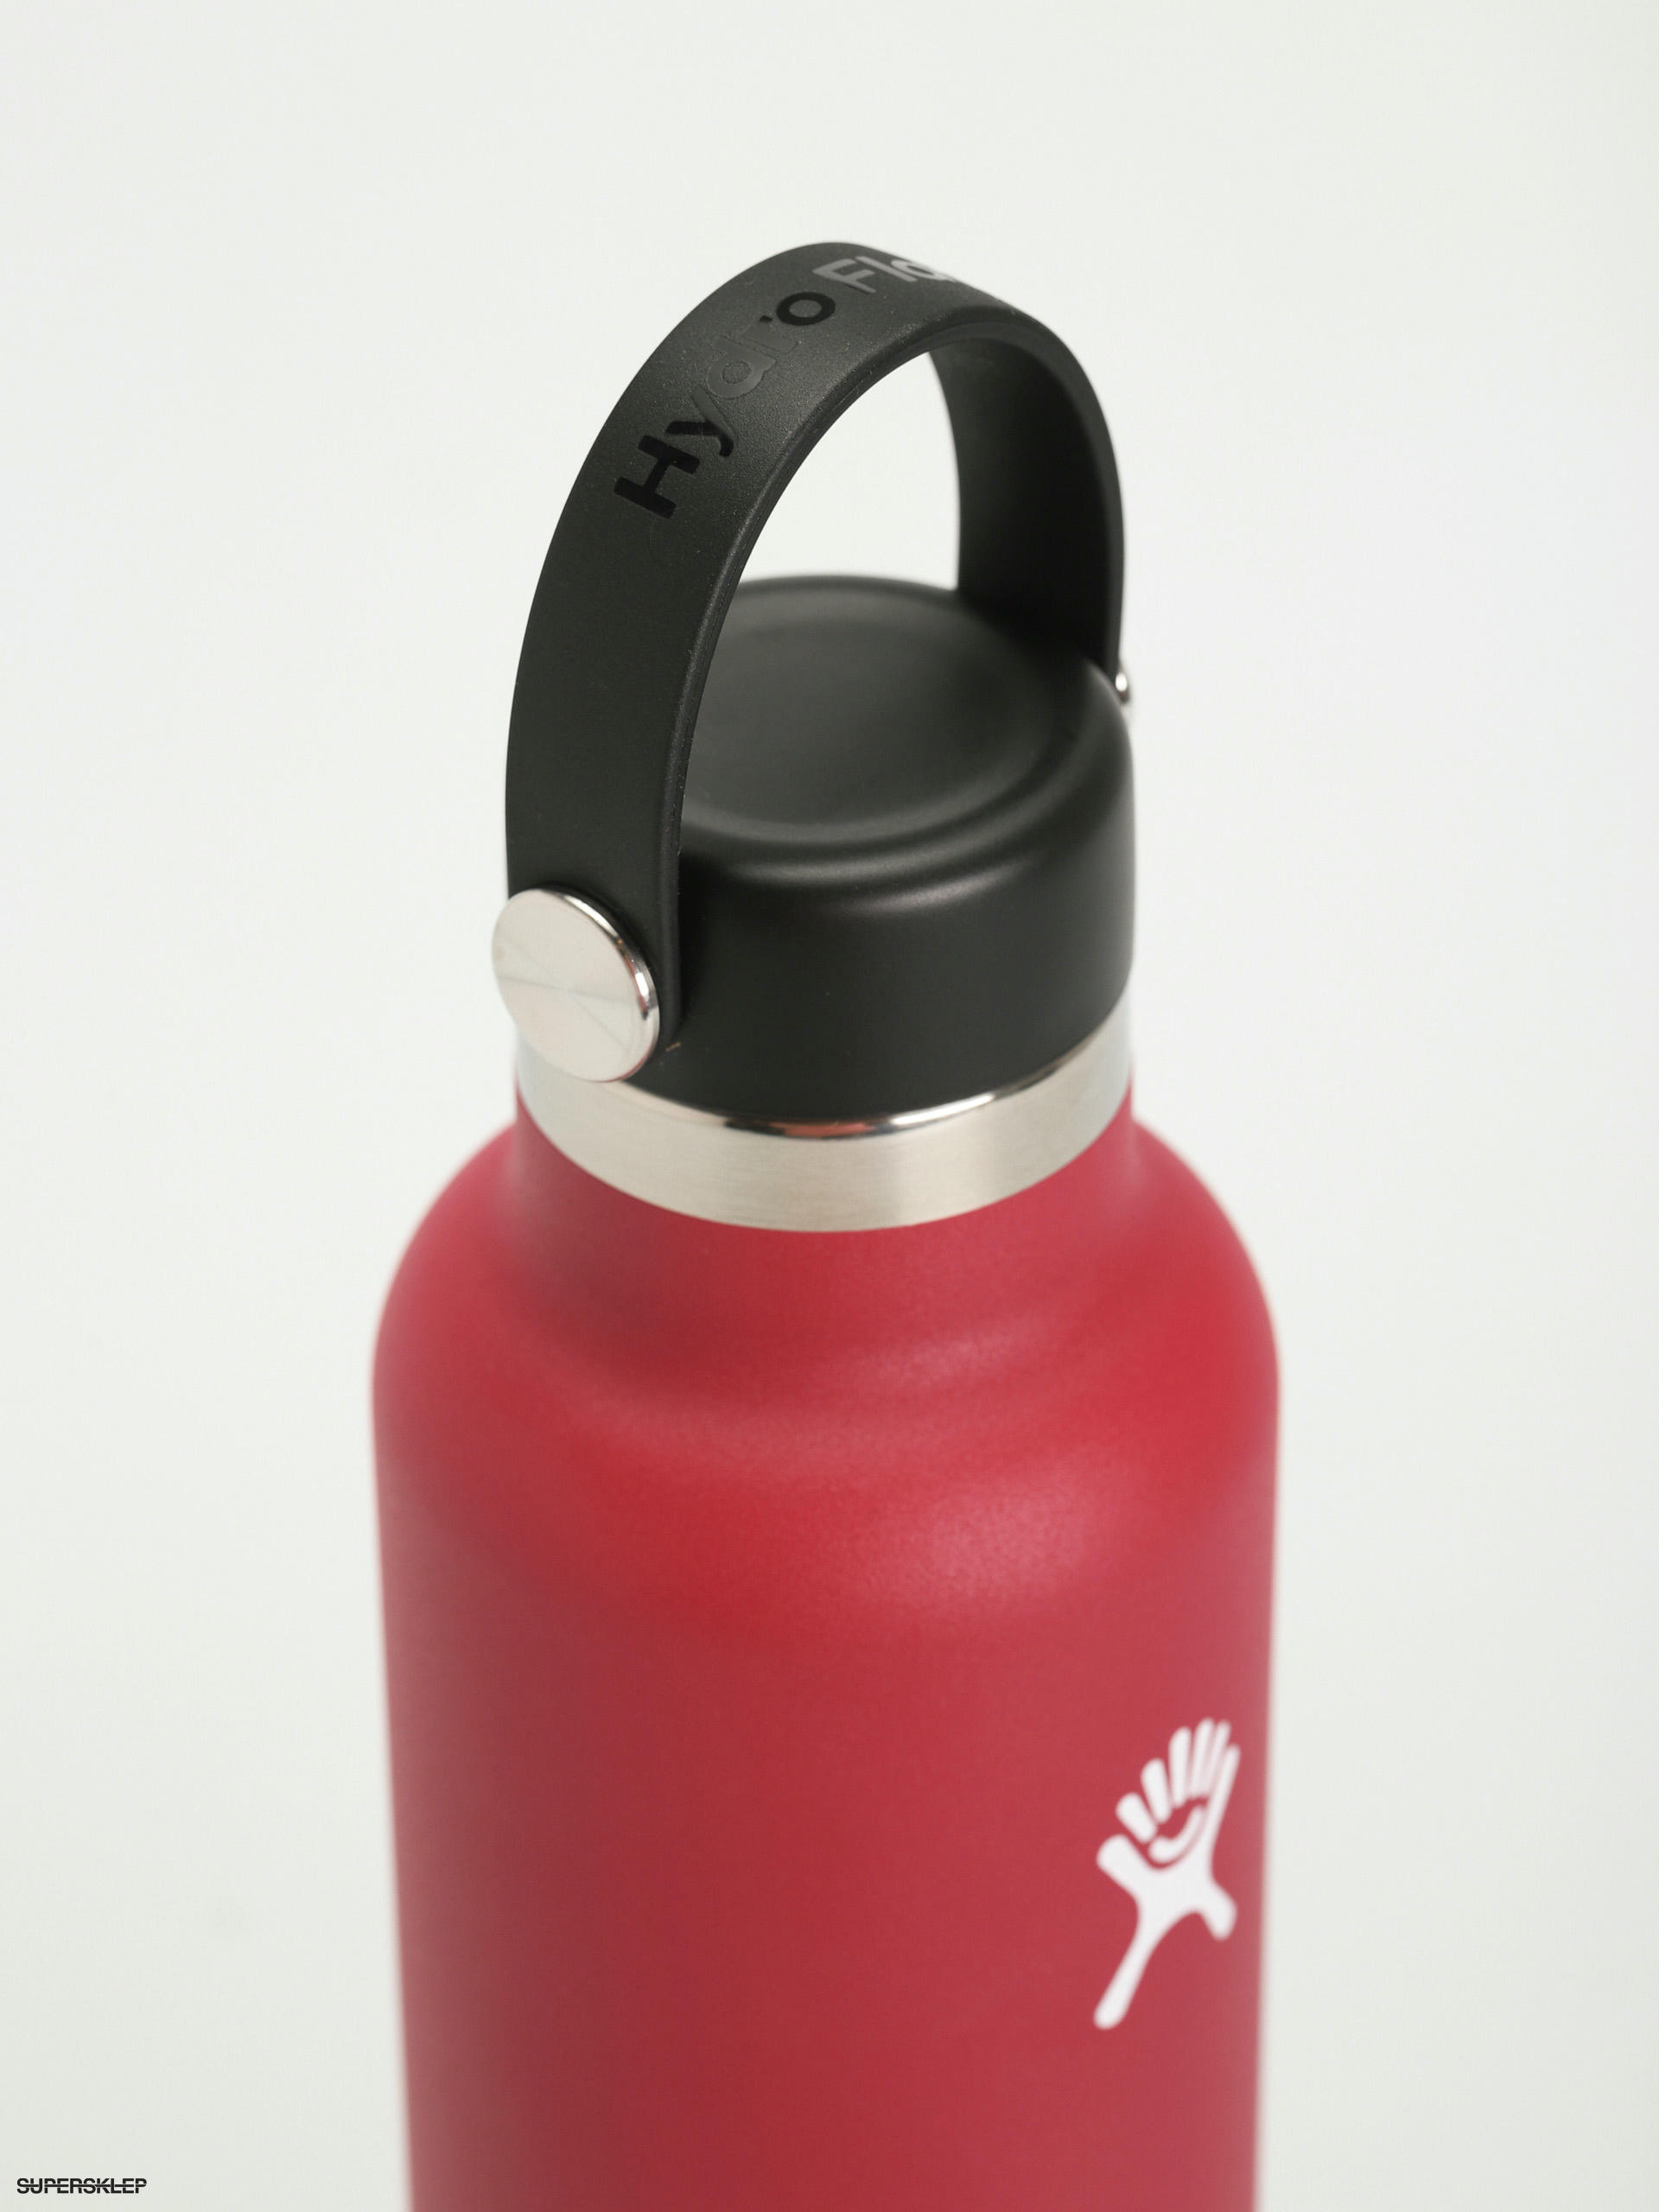 Hydro Flask 21 oz Standard Mouth Flex Cap Bottle, Snapper